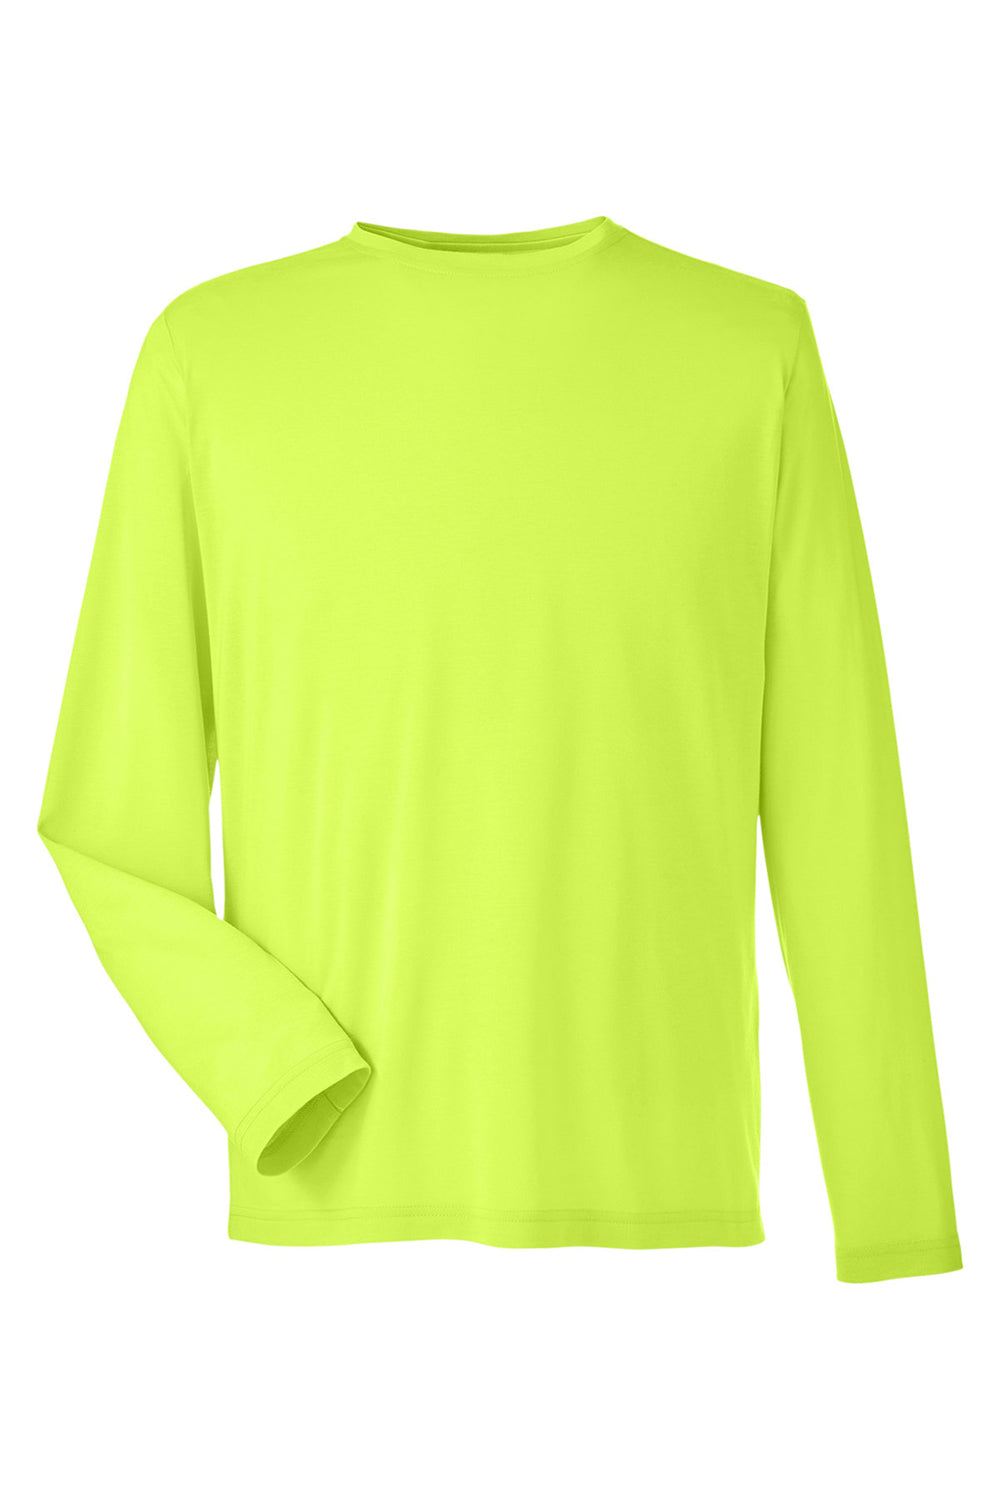 Core 365 CE111L Mens Fusion ChromaSoft Performance Moisture Wicking Long Sleeve Crewneck T-Shirt Safety Yellow Flat Front